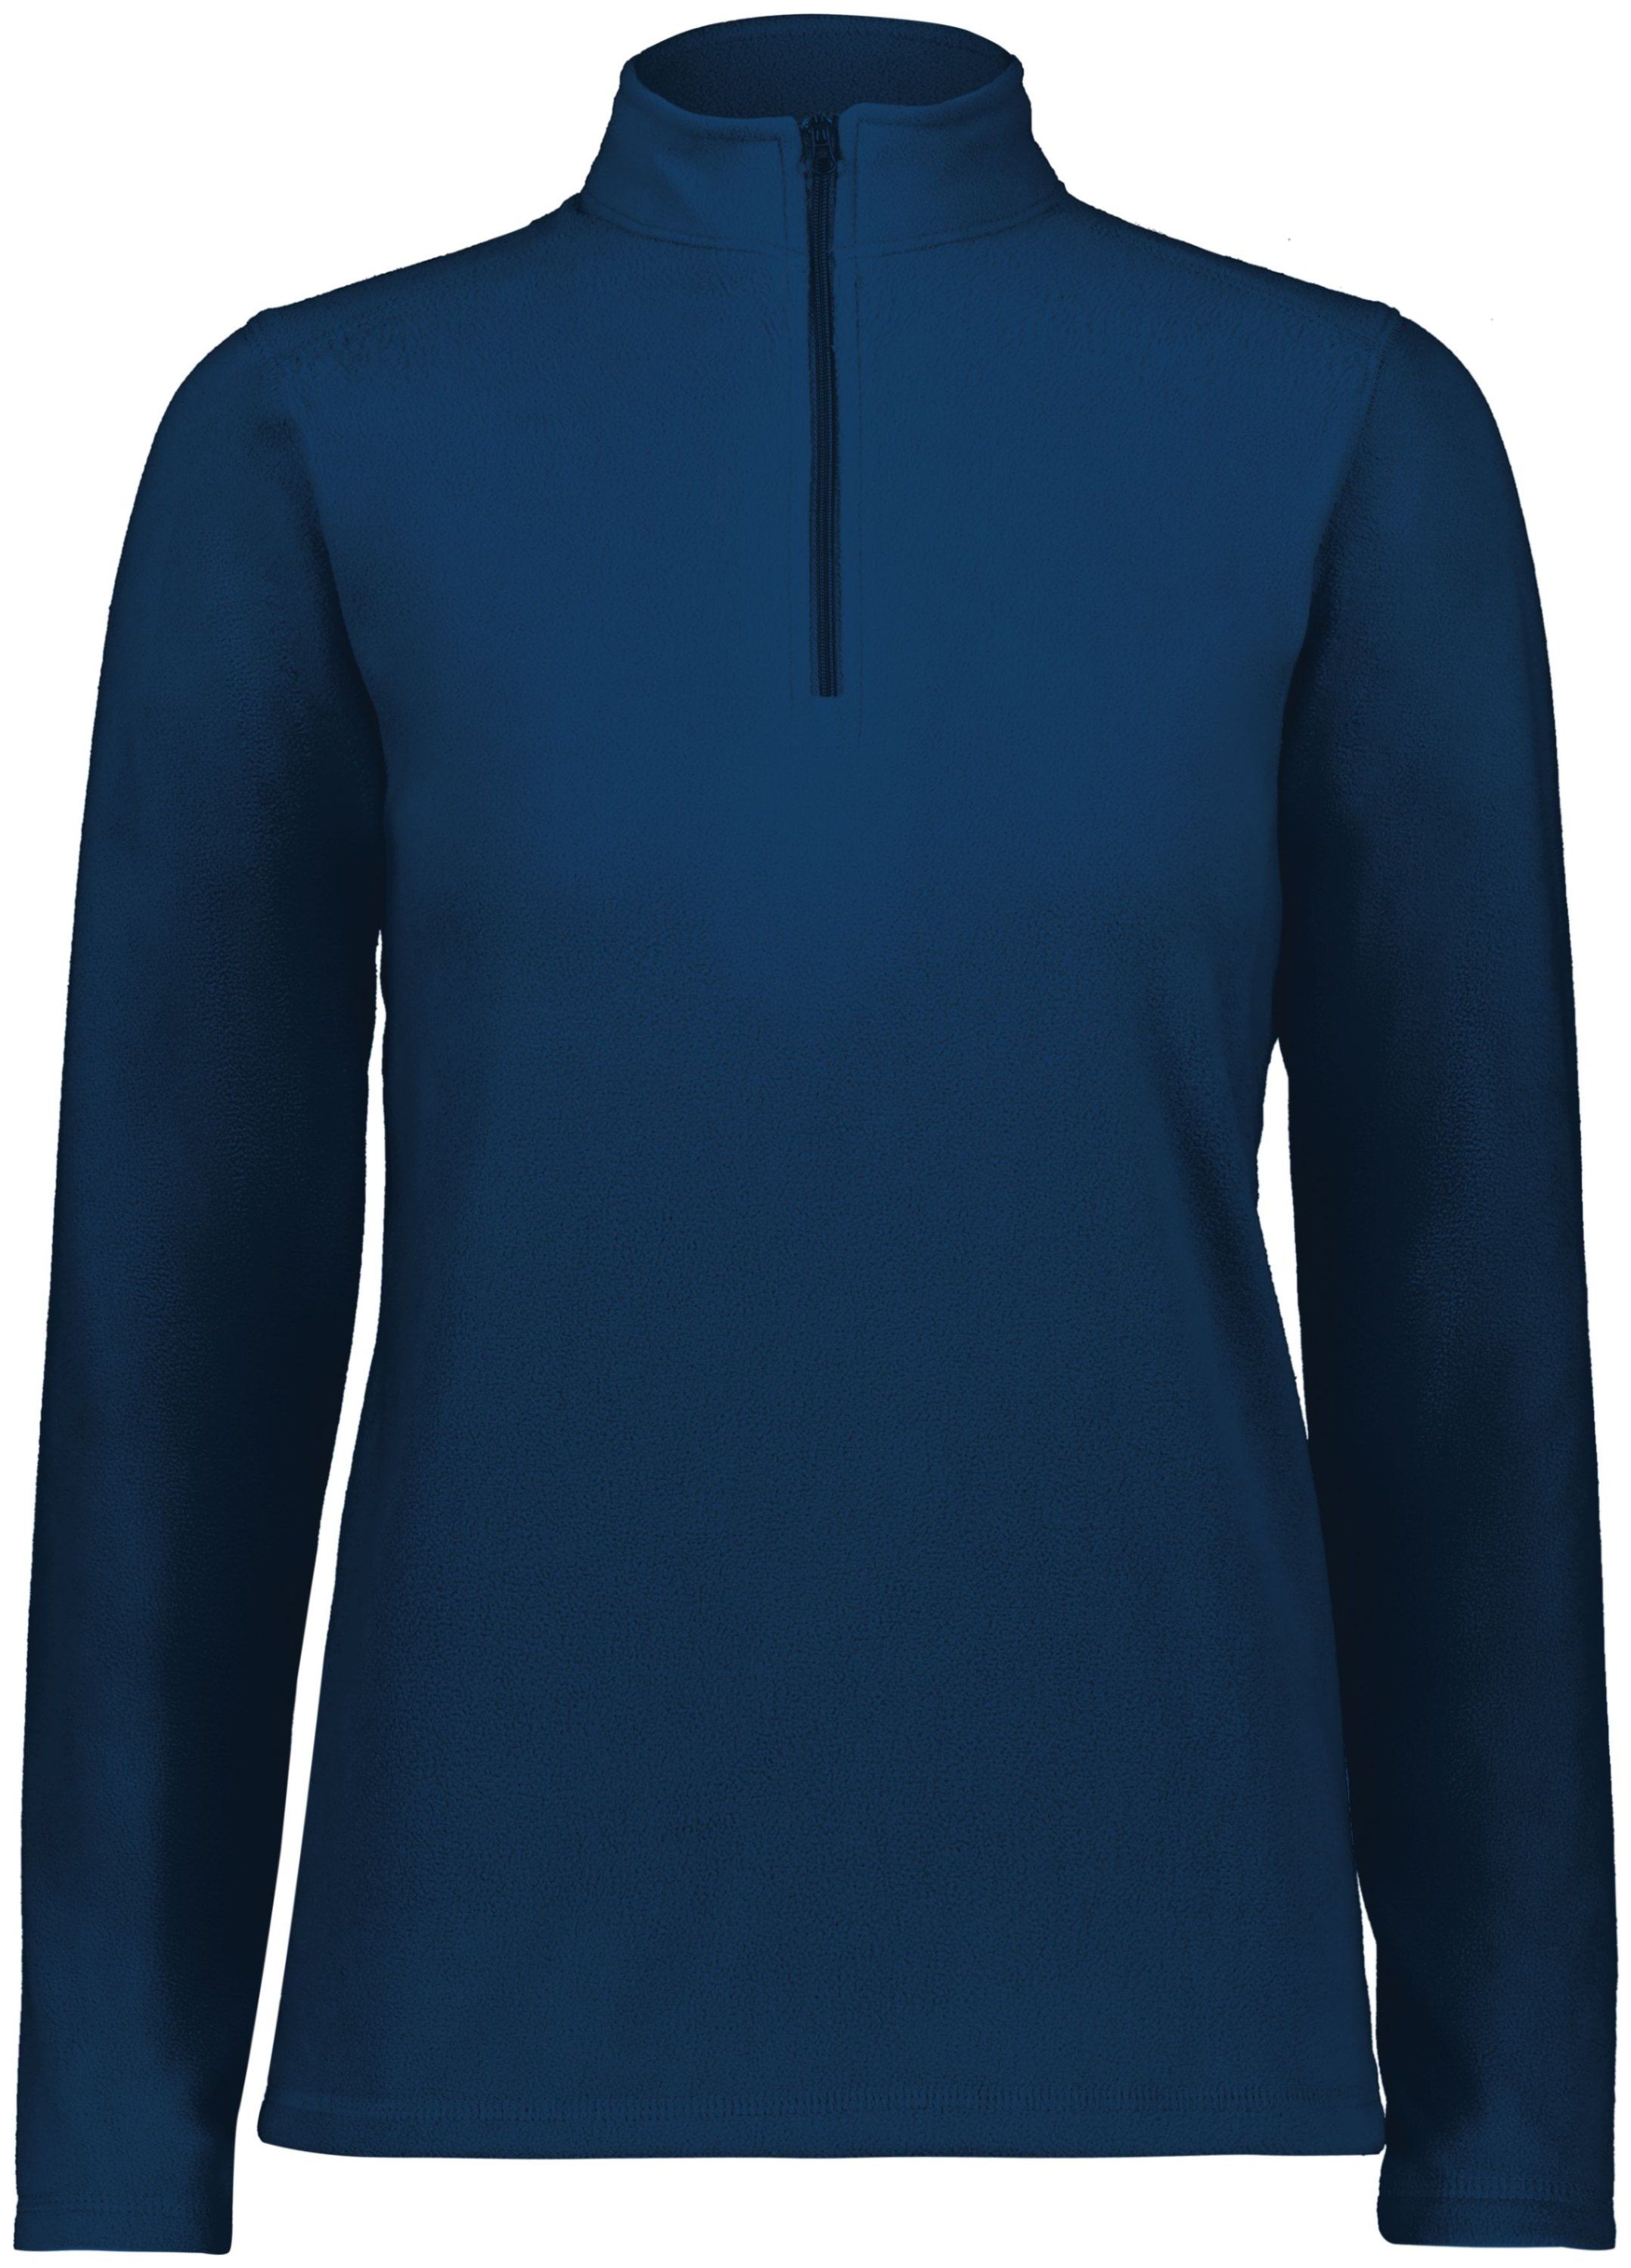 North End Ladies' Aura Sweater Fleece Quarter-Zip